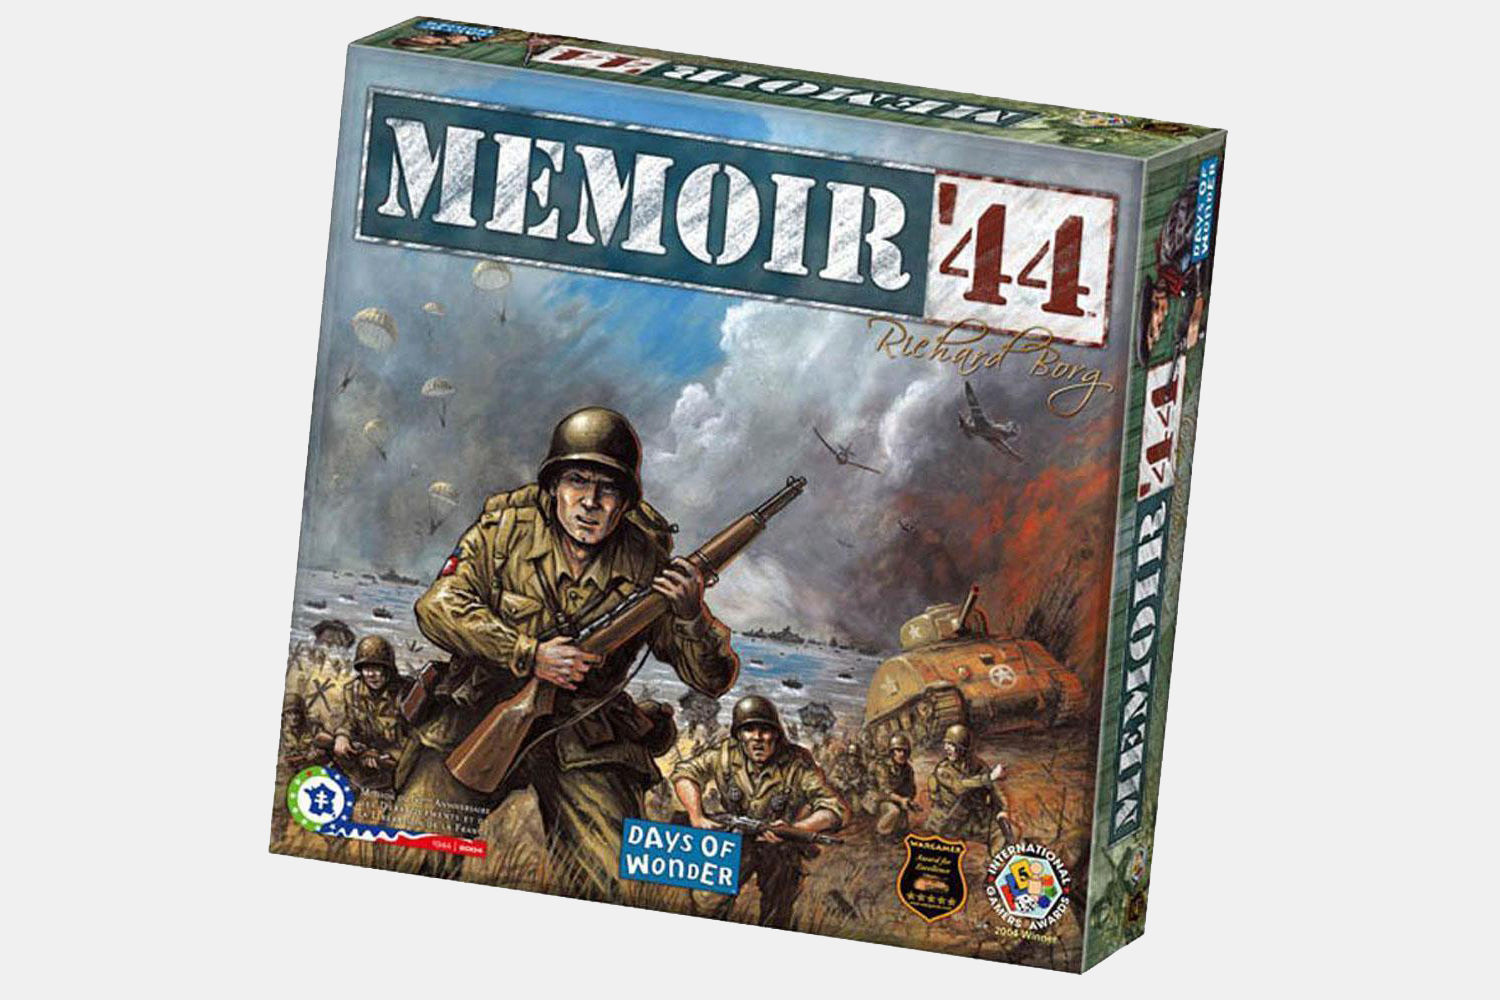 Memoir ‘44 WWII board game